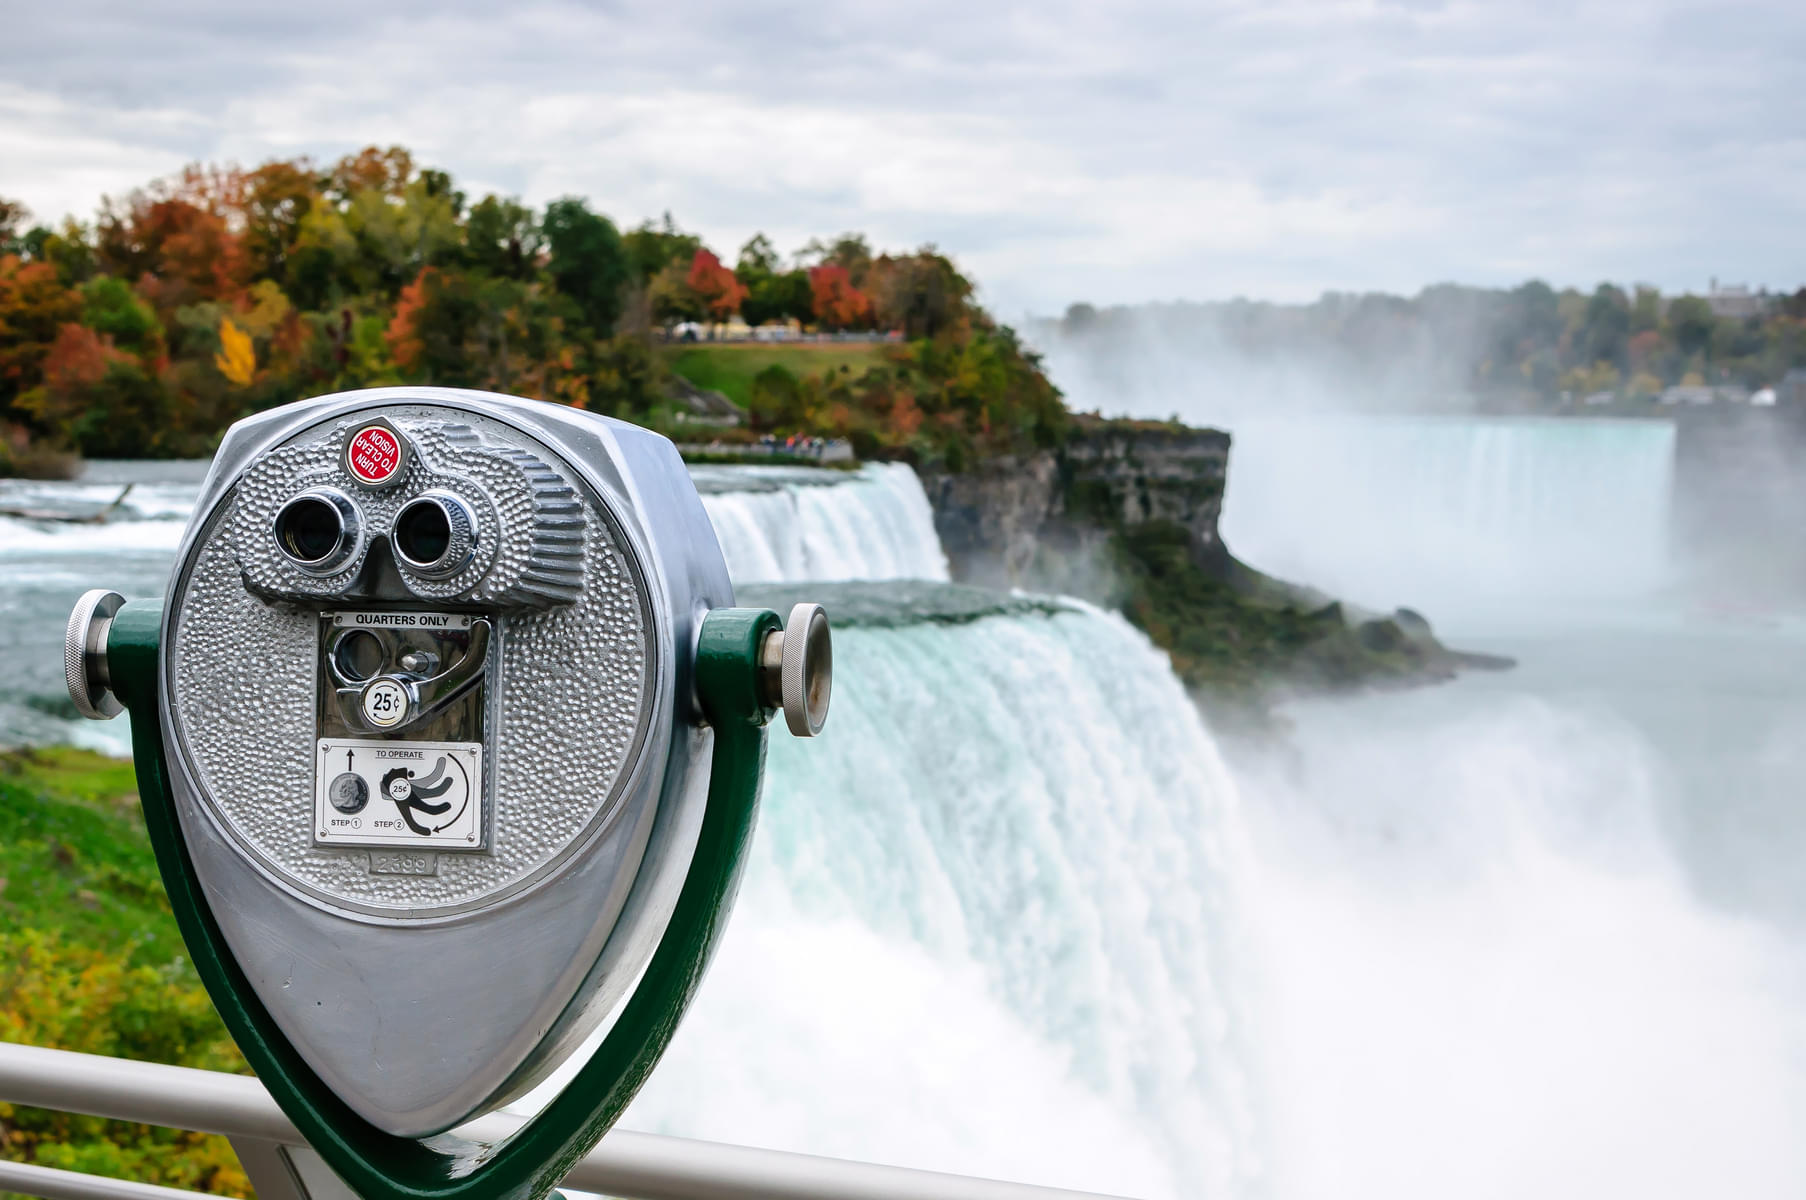 Admire Niagara Falls through binoculars